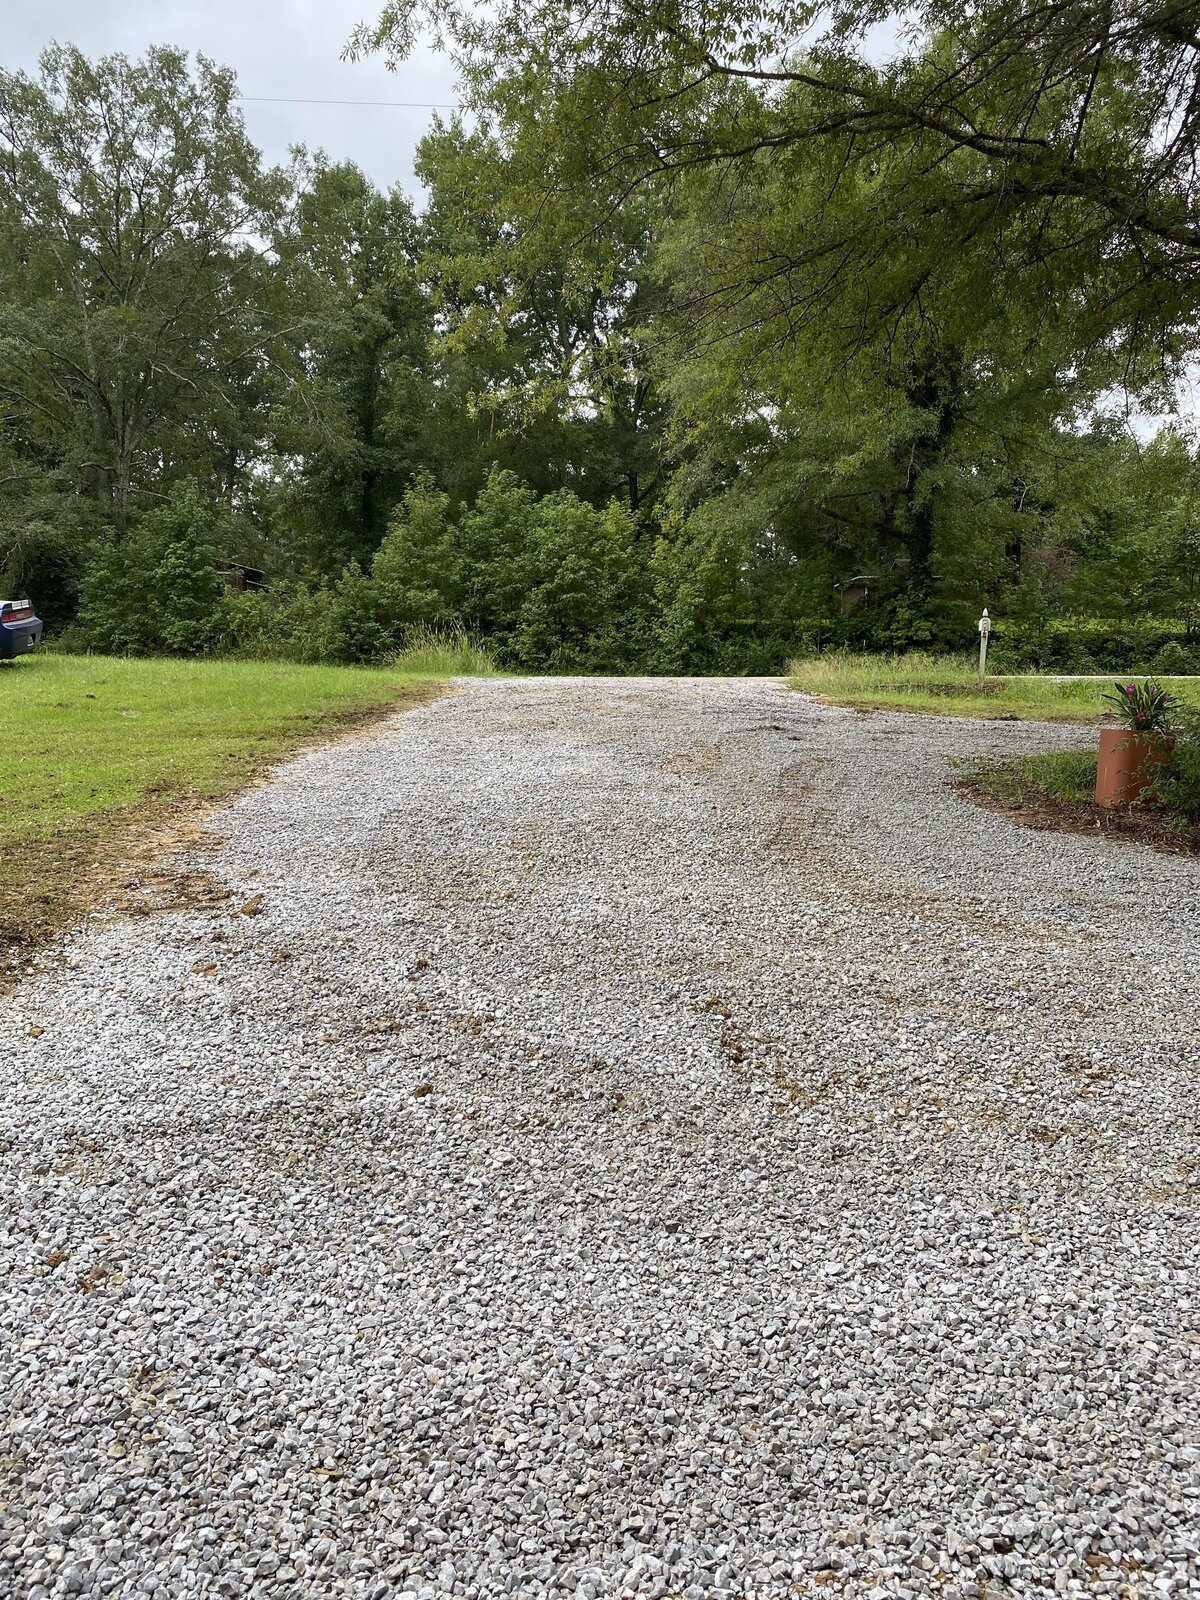 gravel-path-next-to-green-grass